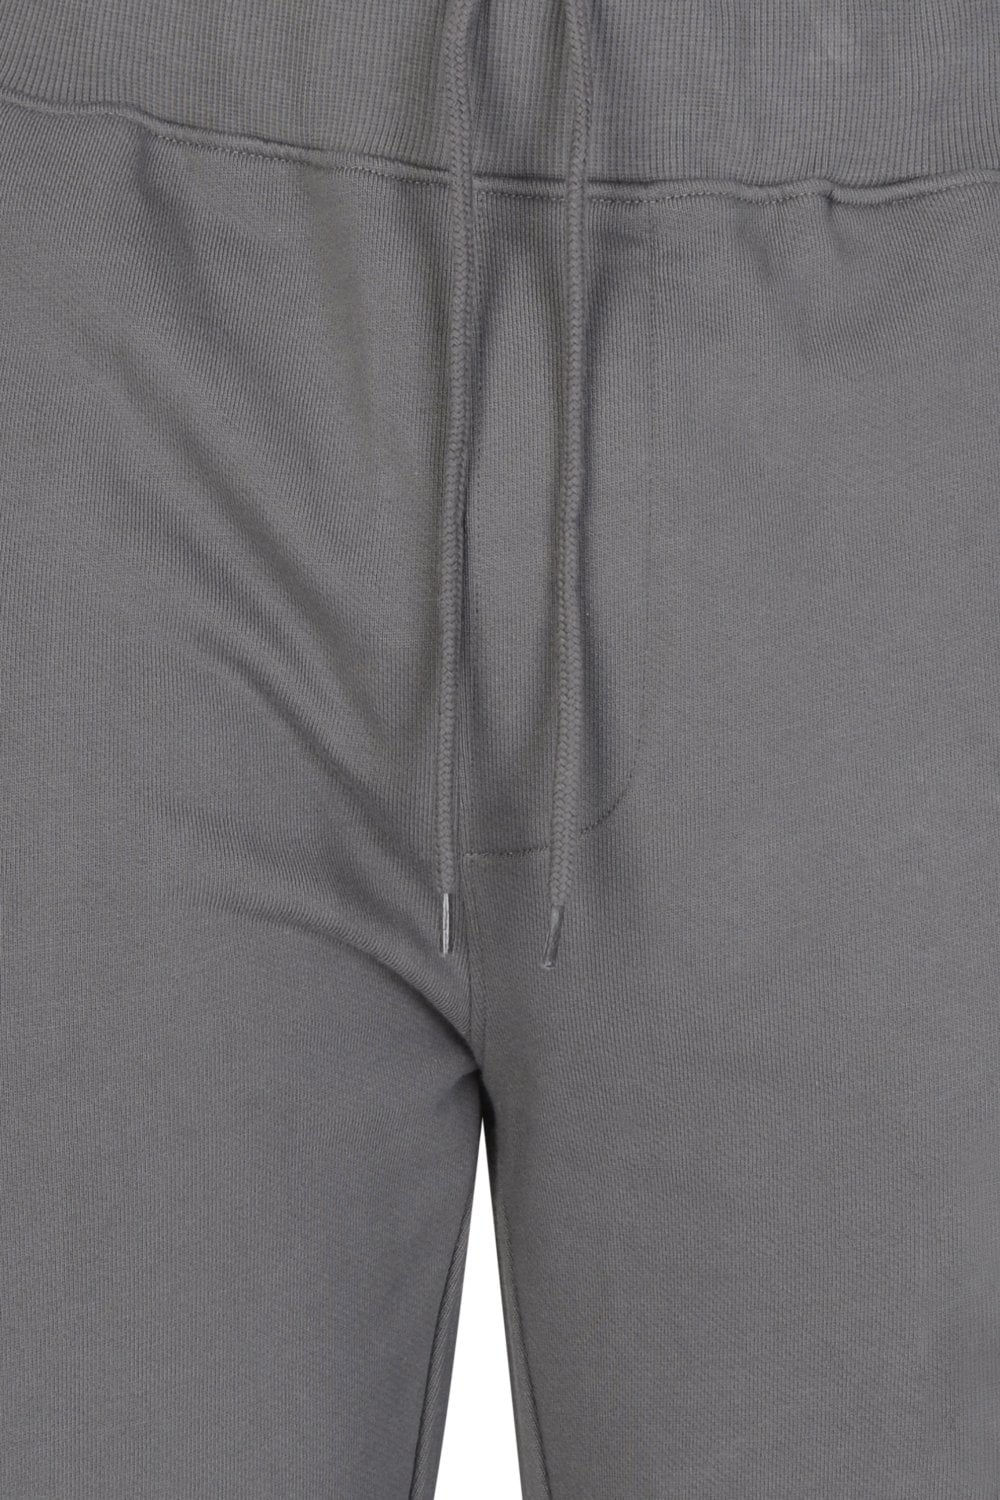 C.P. Company MSP017A Lens Jogging Bottoms - 938 Gargoyle - Escape Menswear